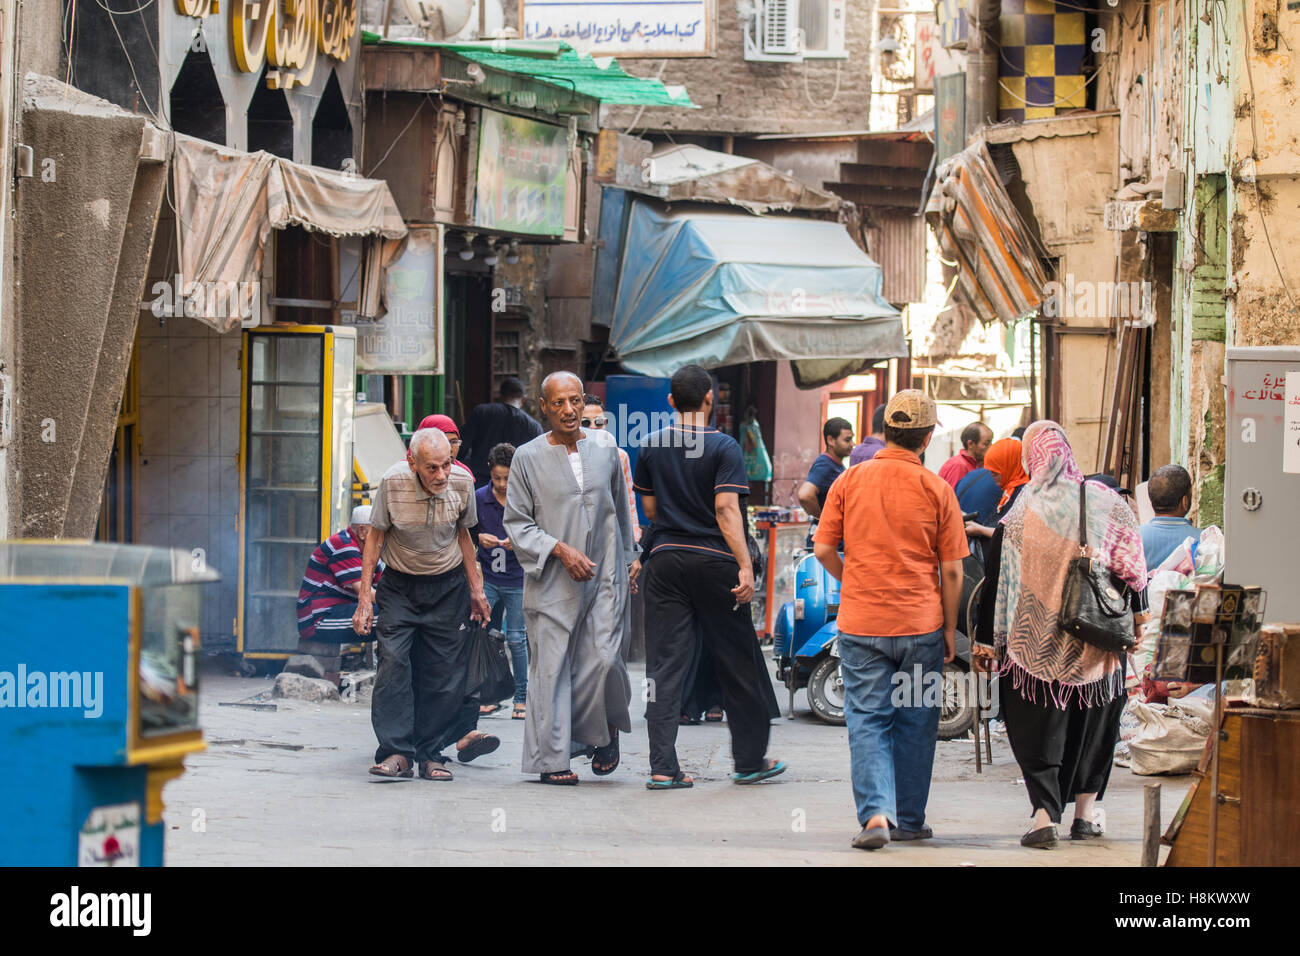 Cairo, Egypt. Locals walking through shops along an alleyway in the outdoor bazaar/ flea market Khan el-Khalili in Cairo. Stock Photo